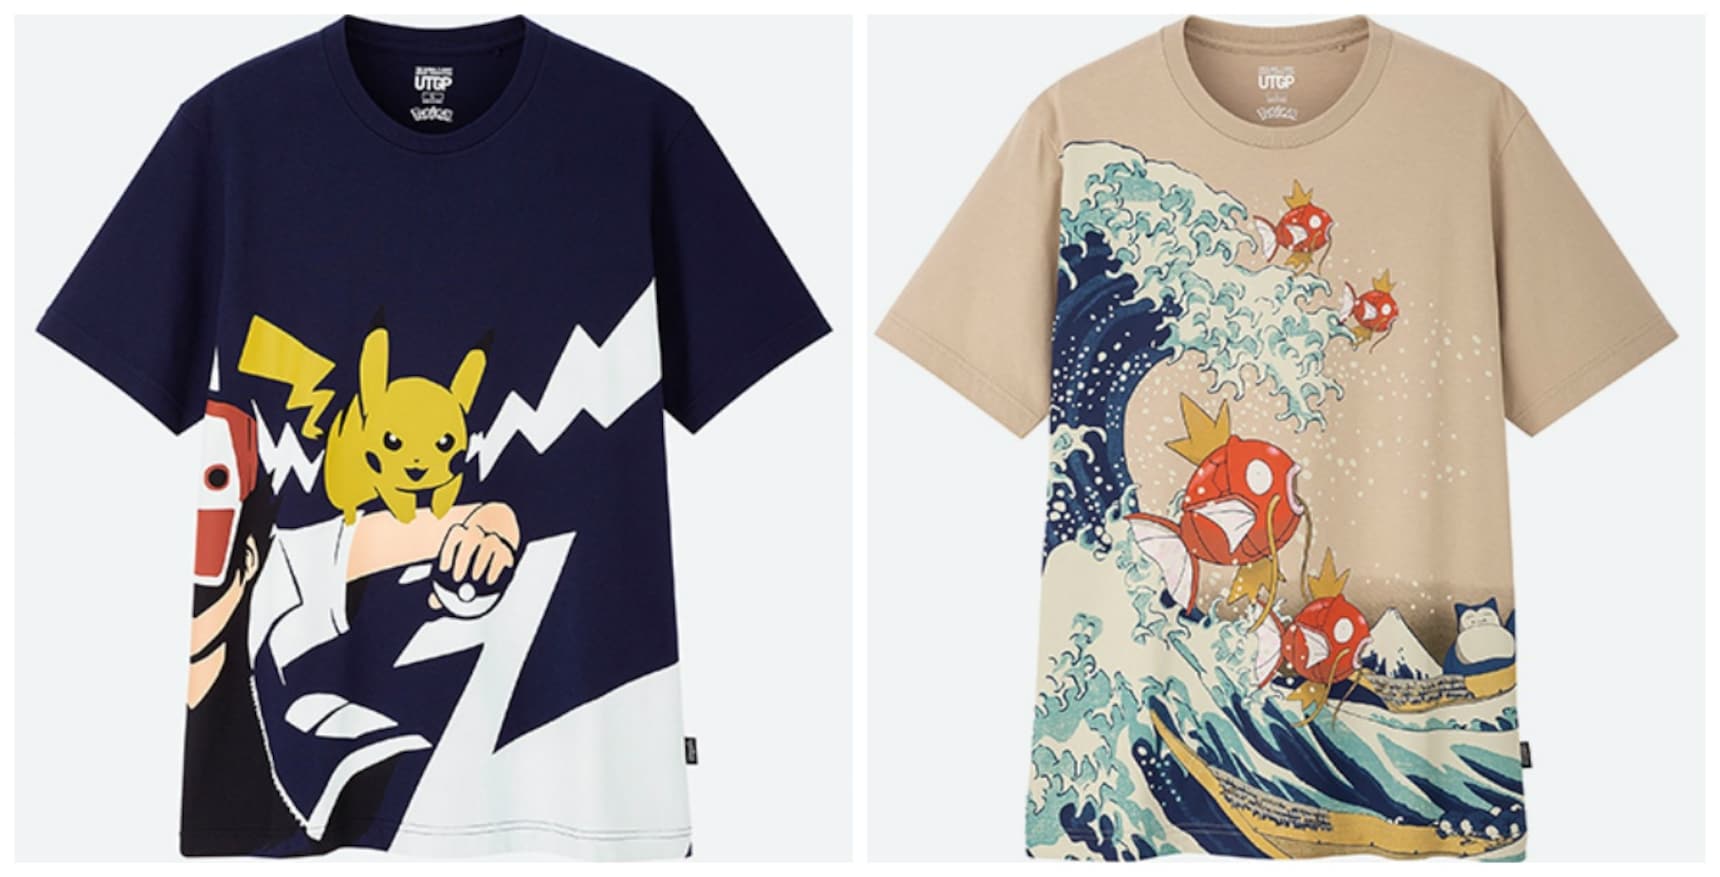 Uniqlo Pokémon T-Shirt Design Winners